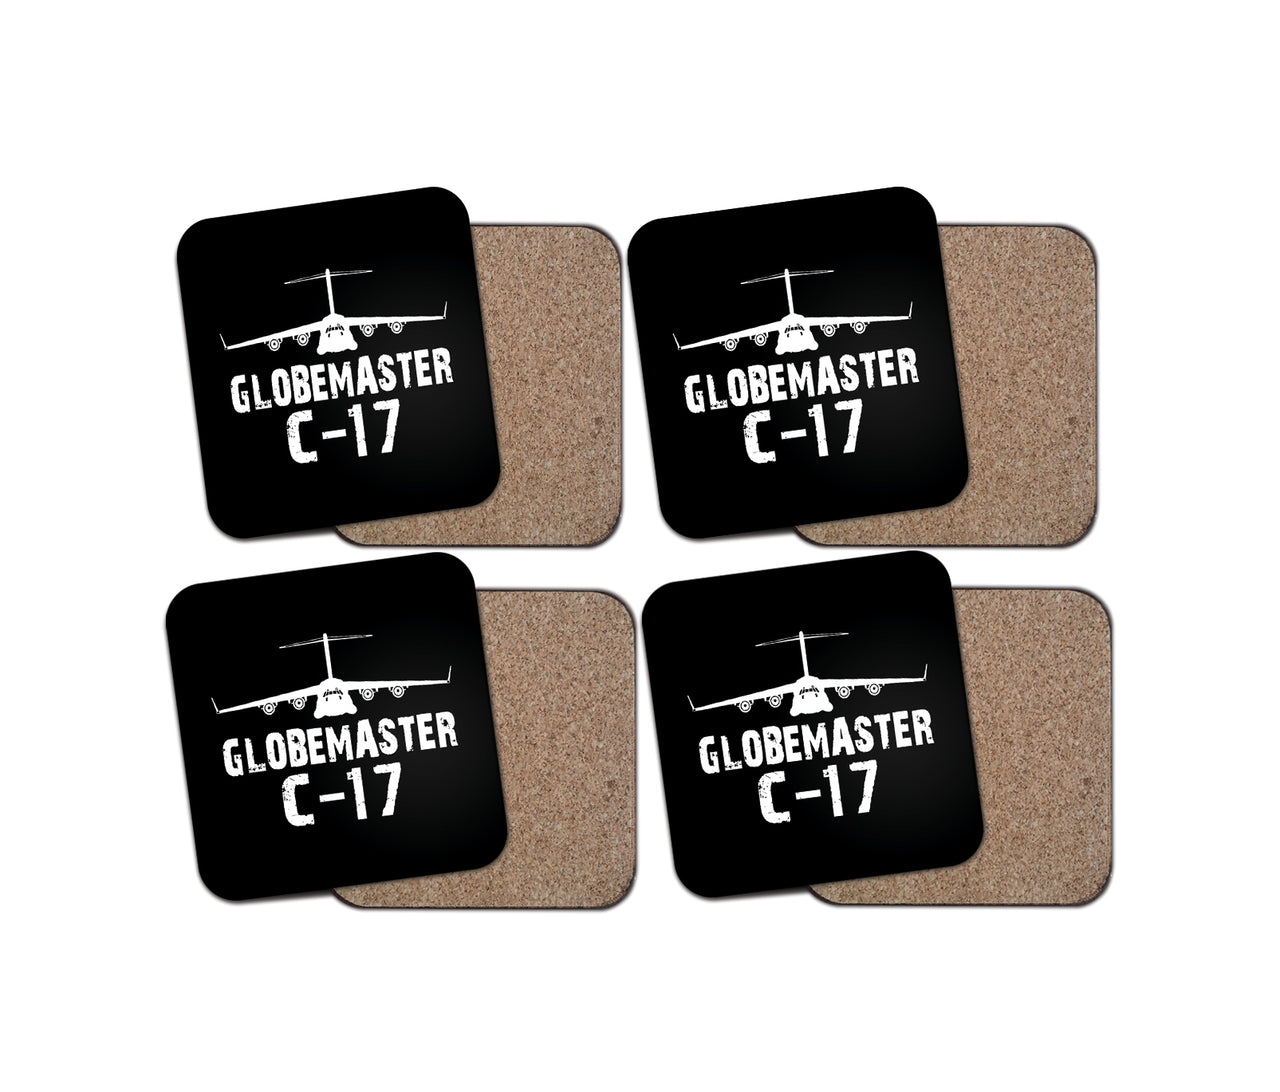 GlobeMaster C-17 & Plane Designed Coasters